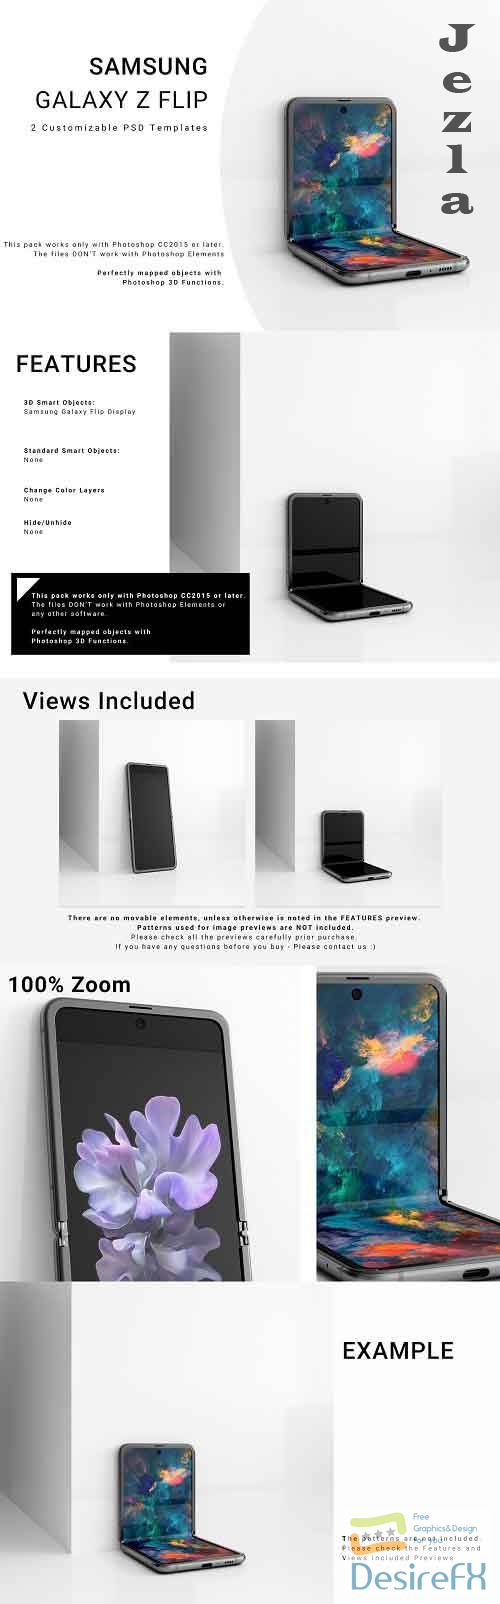 Samsung Galaxy Z Flip Mockups Set - 4607512